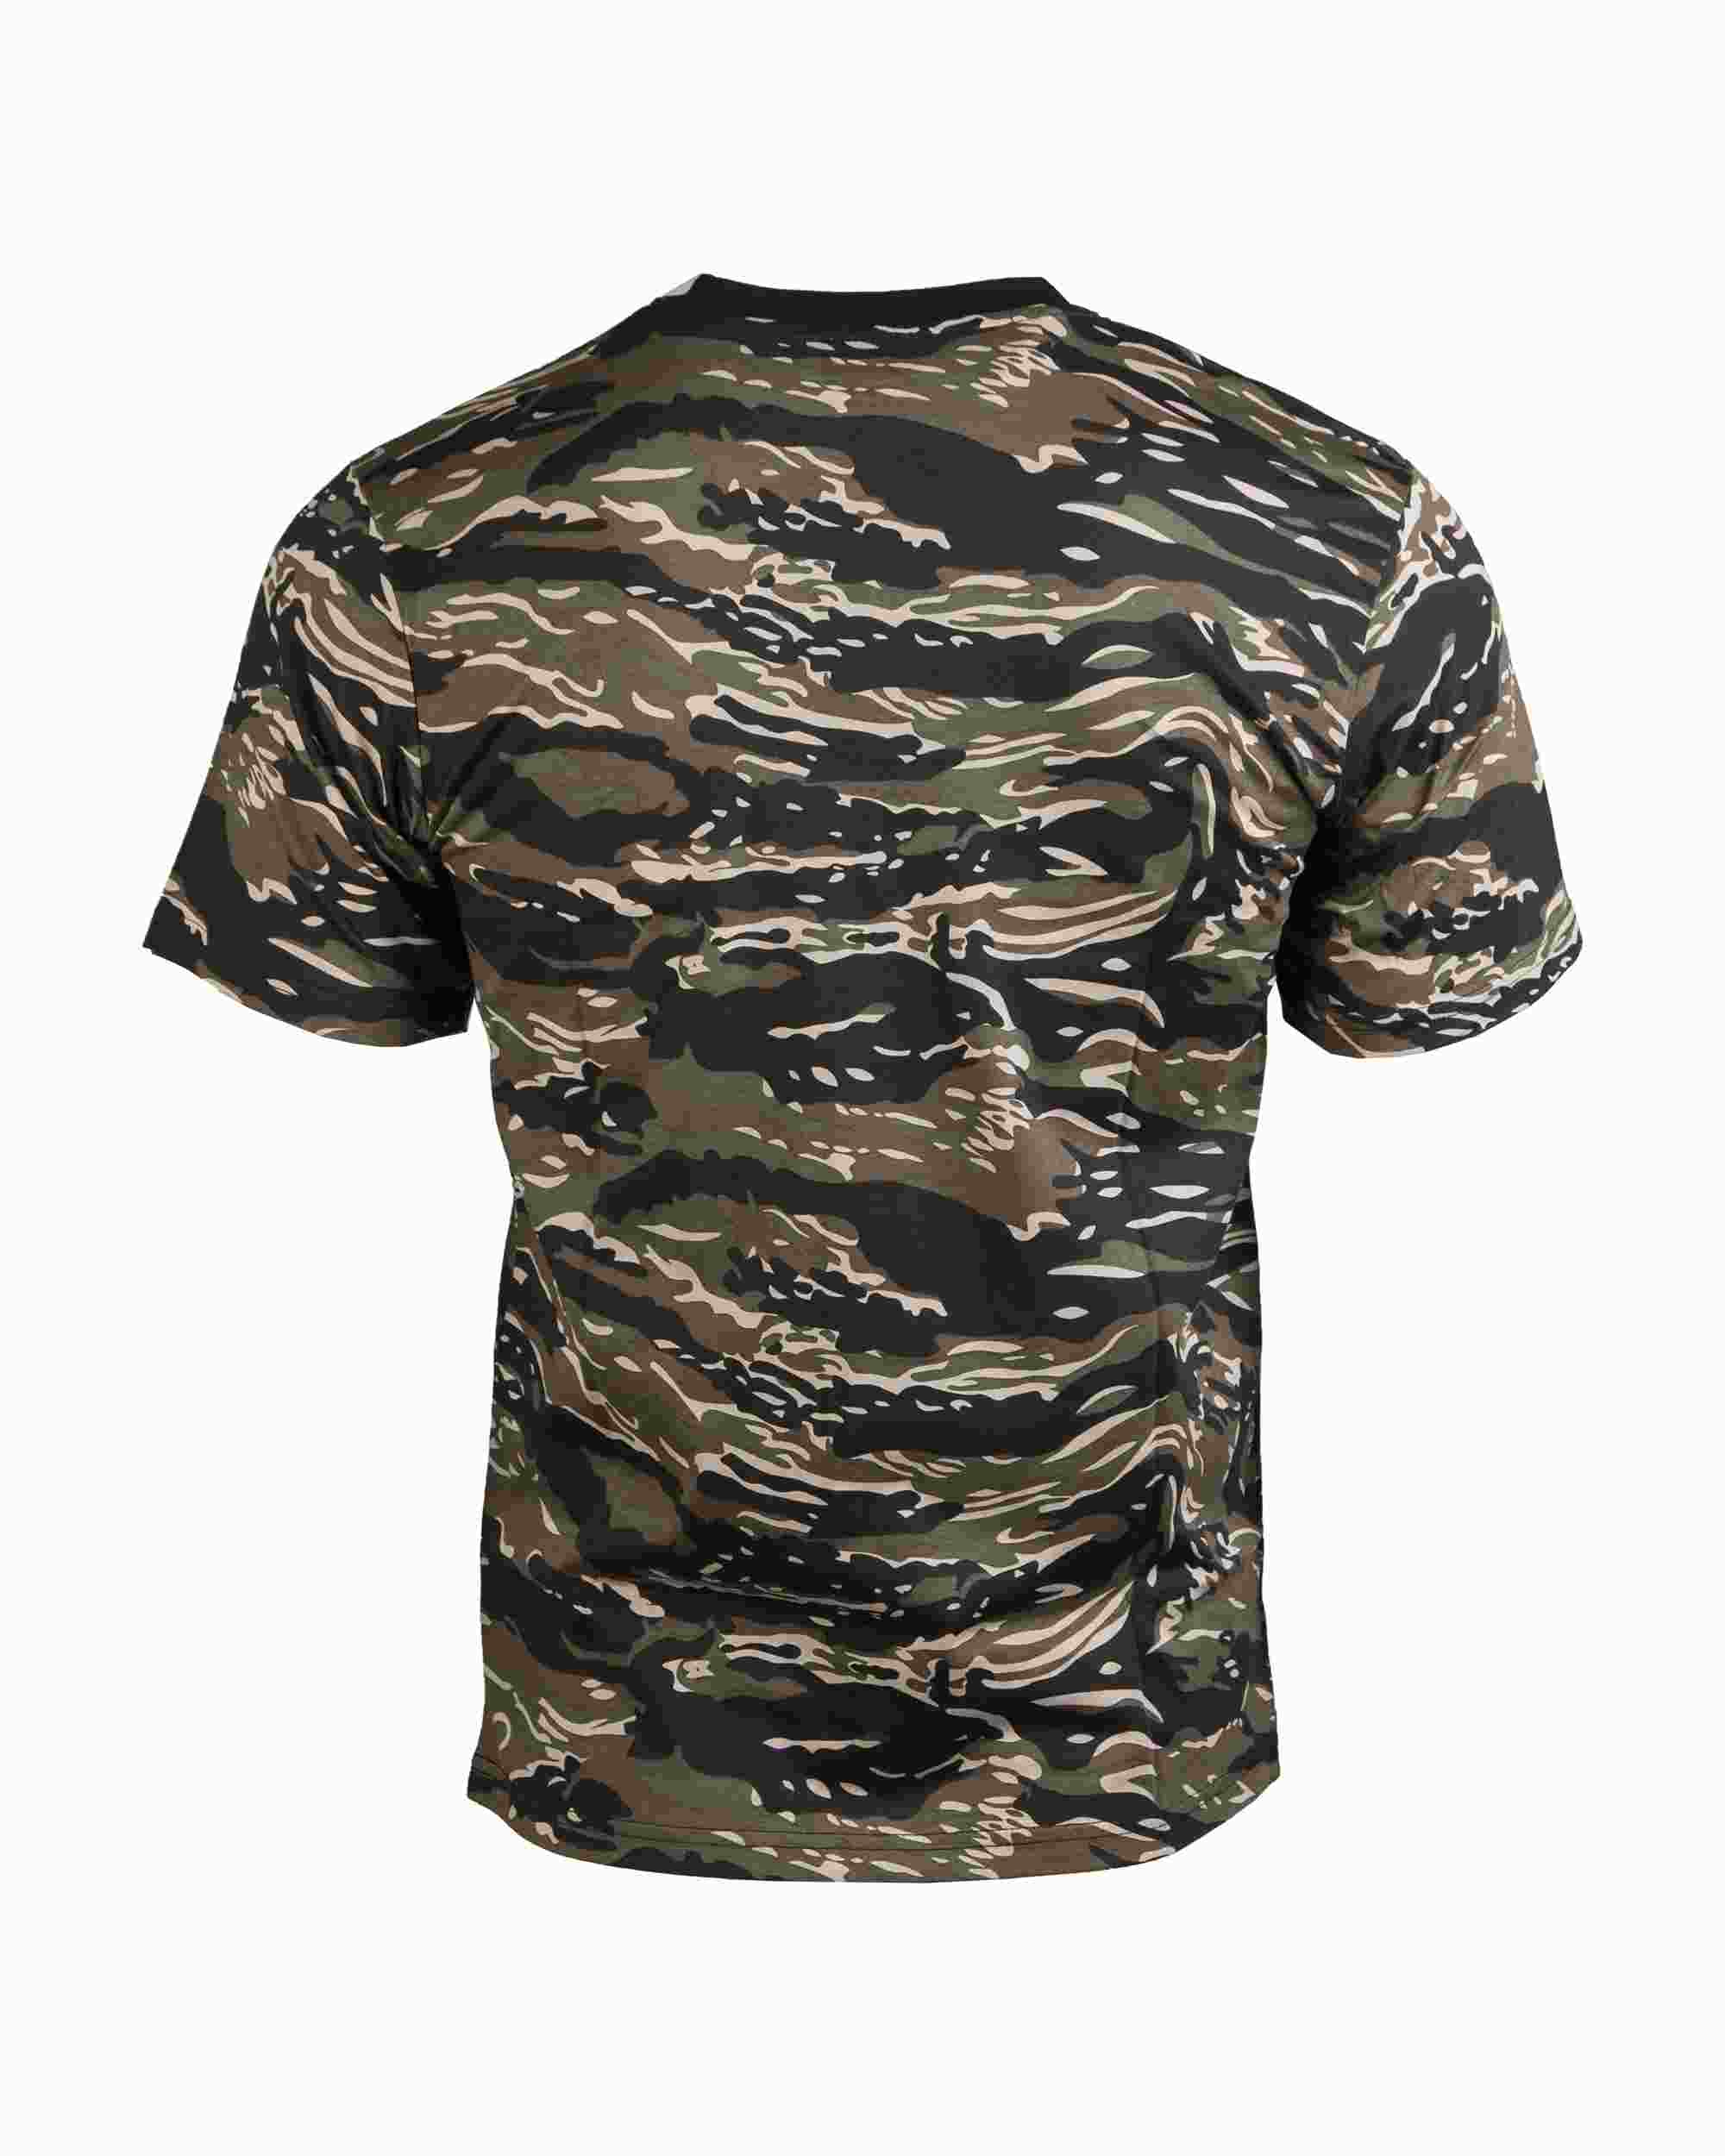 T-Shirt Tarn Tiger Stripe